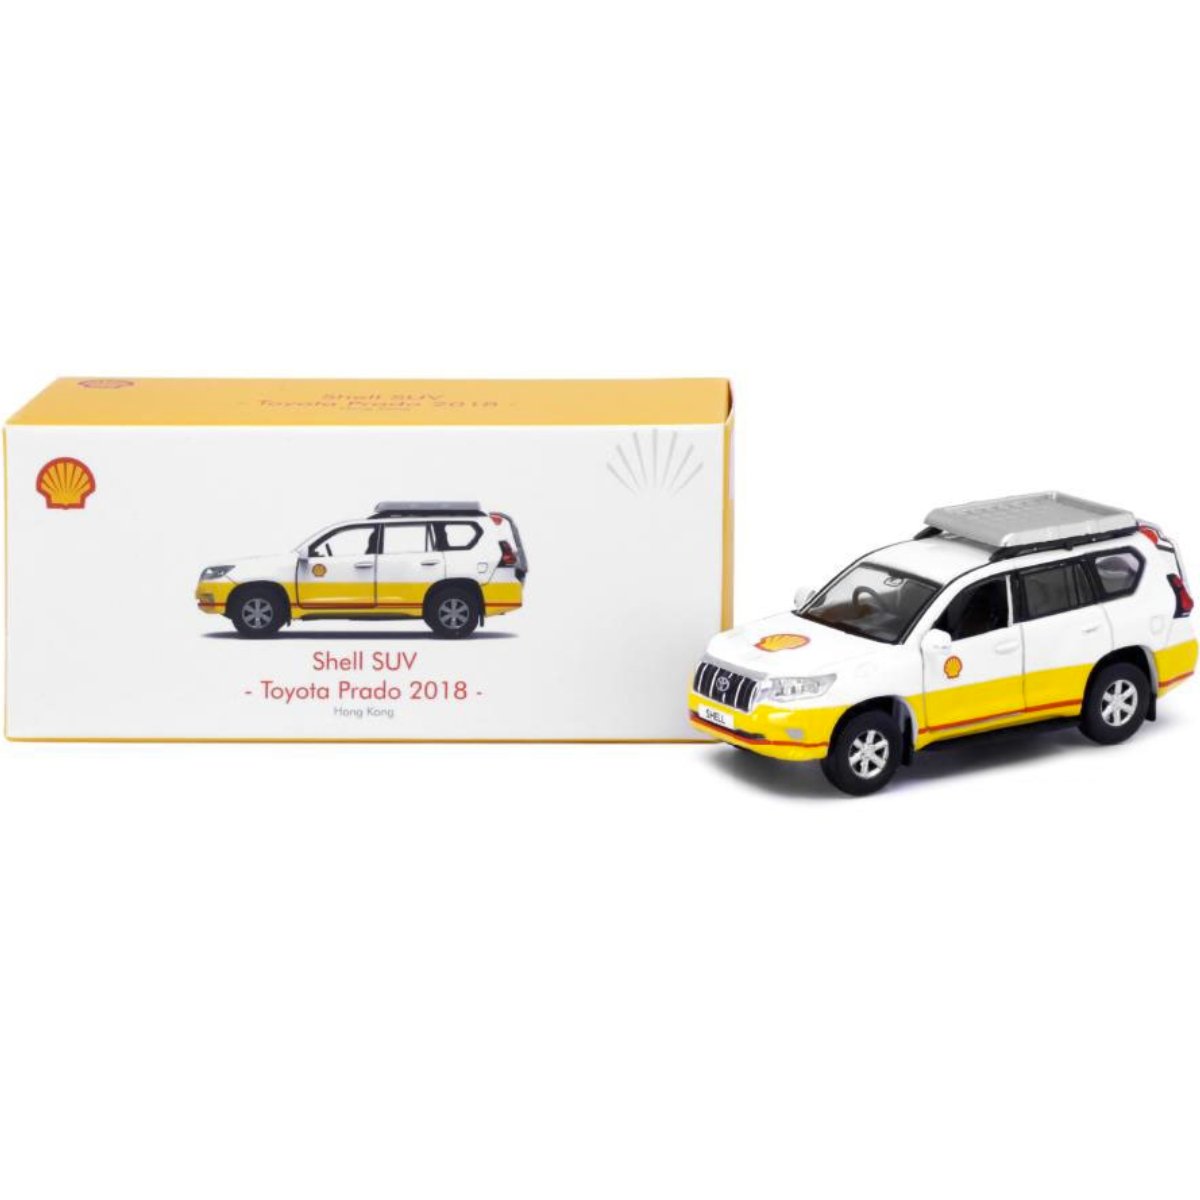 Tiny Models Toyota Prado 2018 Shell SUV (1:64 Scale) - Phillips Hobbies